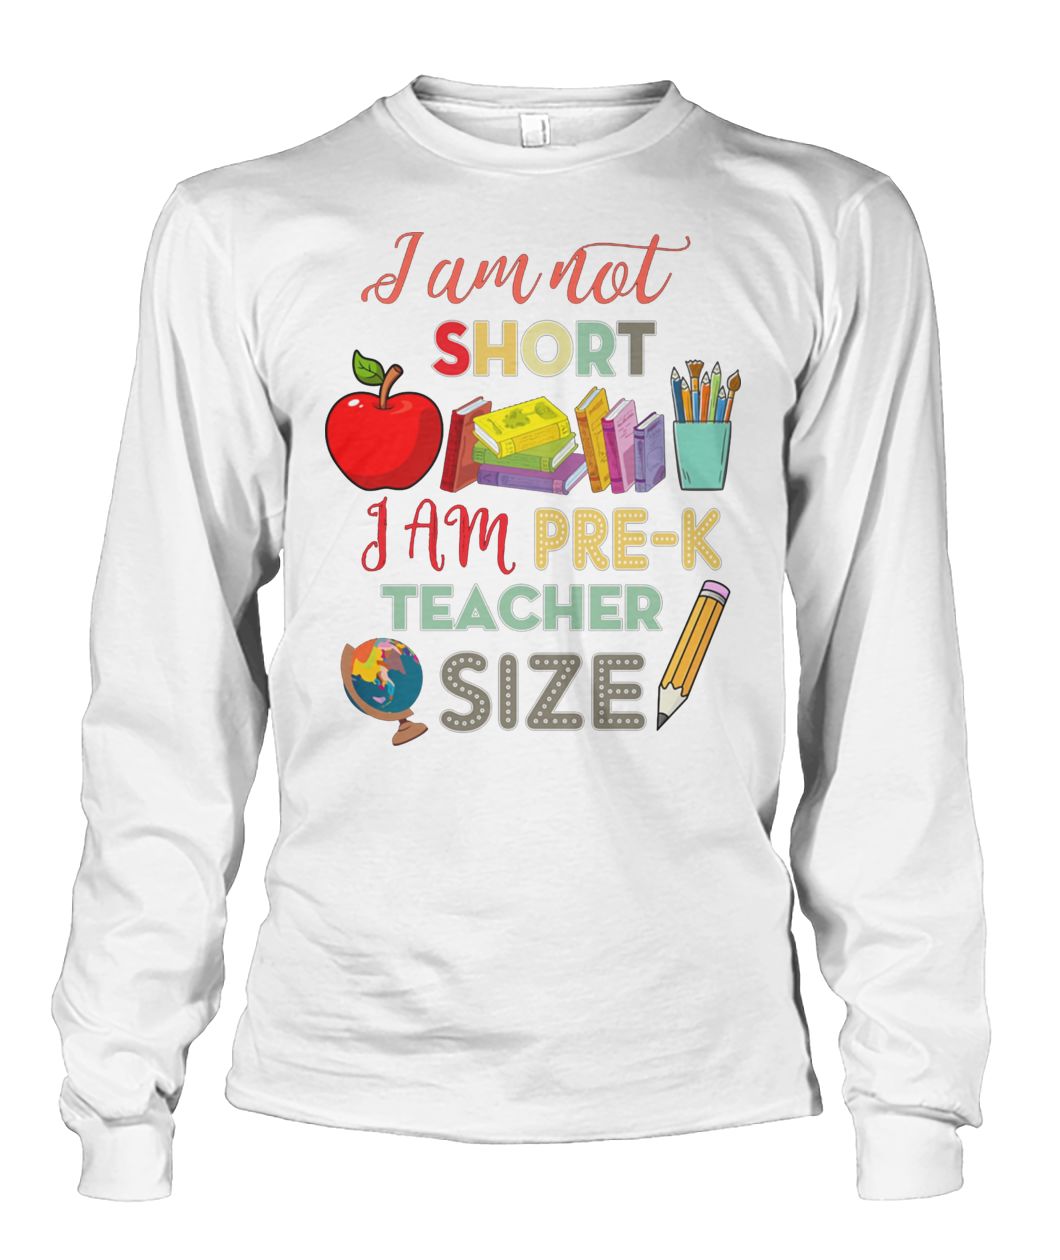 I am not short I am pre-k teacher size unisex long sleeve